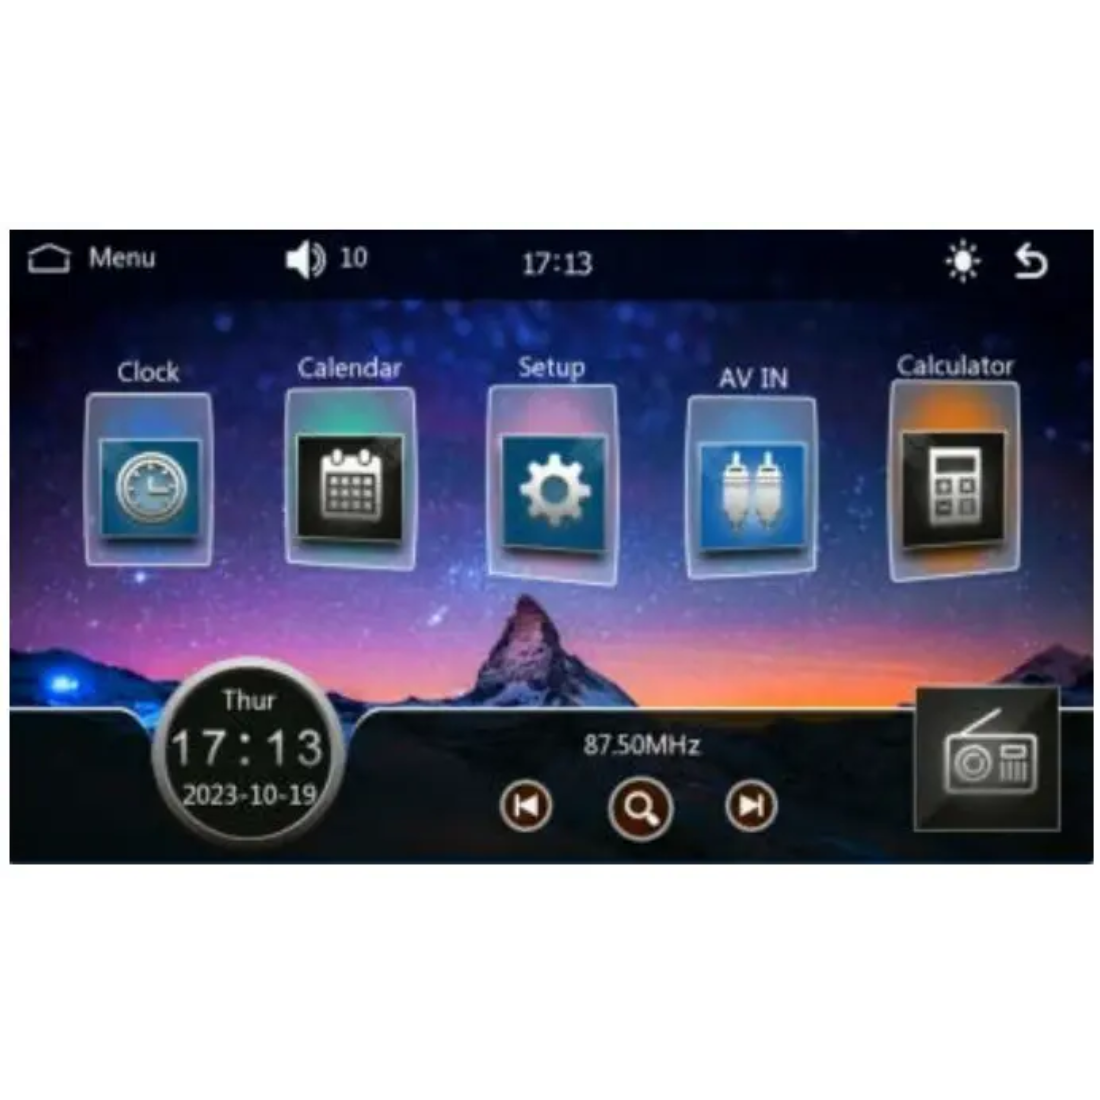 Xelon Audio XA-M728CP 6.5" 2-DIN Car Stereo In-Dash Mechless Multimedia Receiver